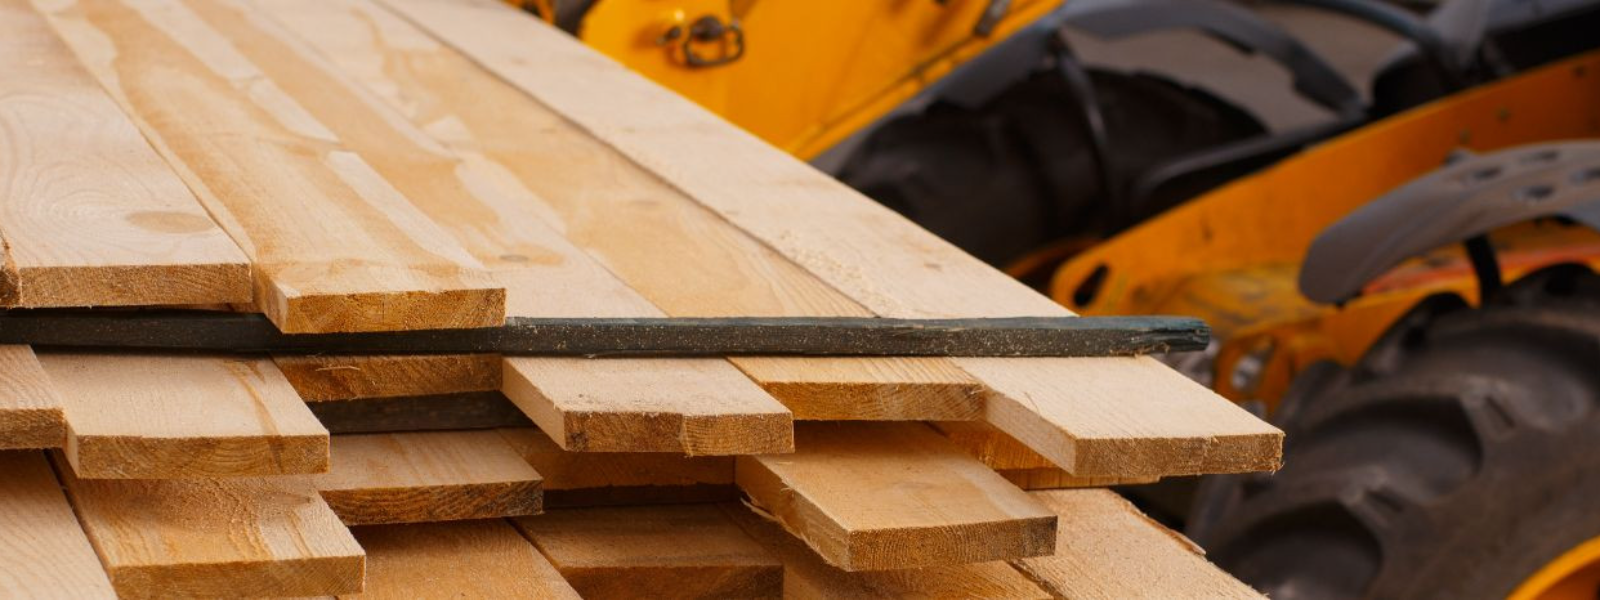 Manufacture of sawn timber in Estonia